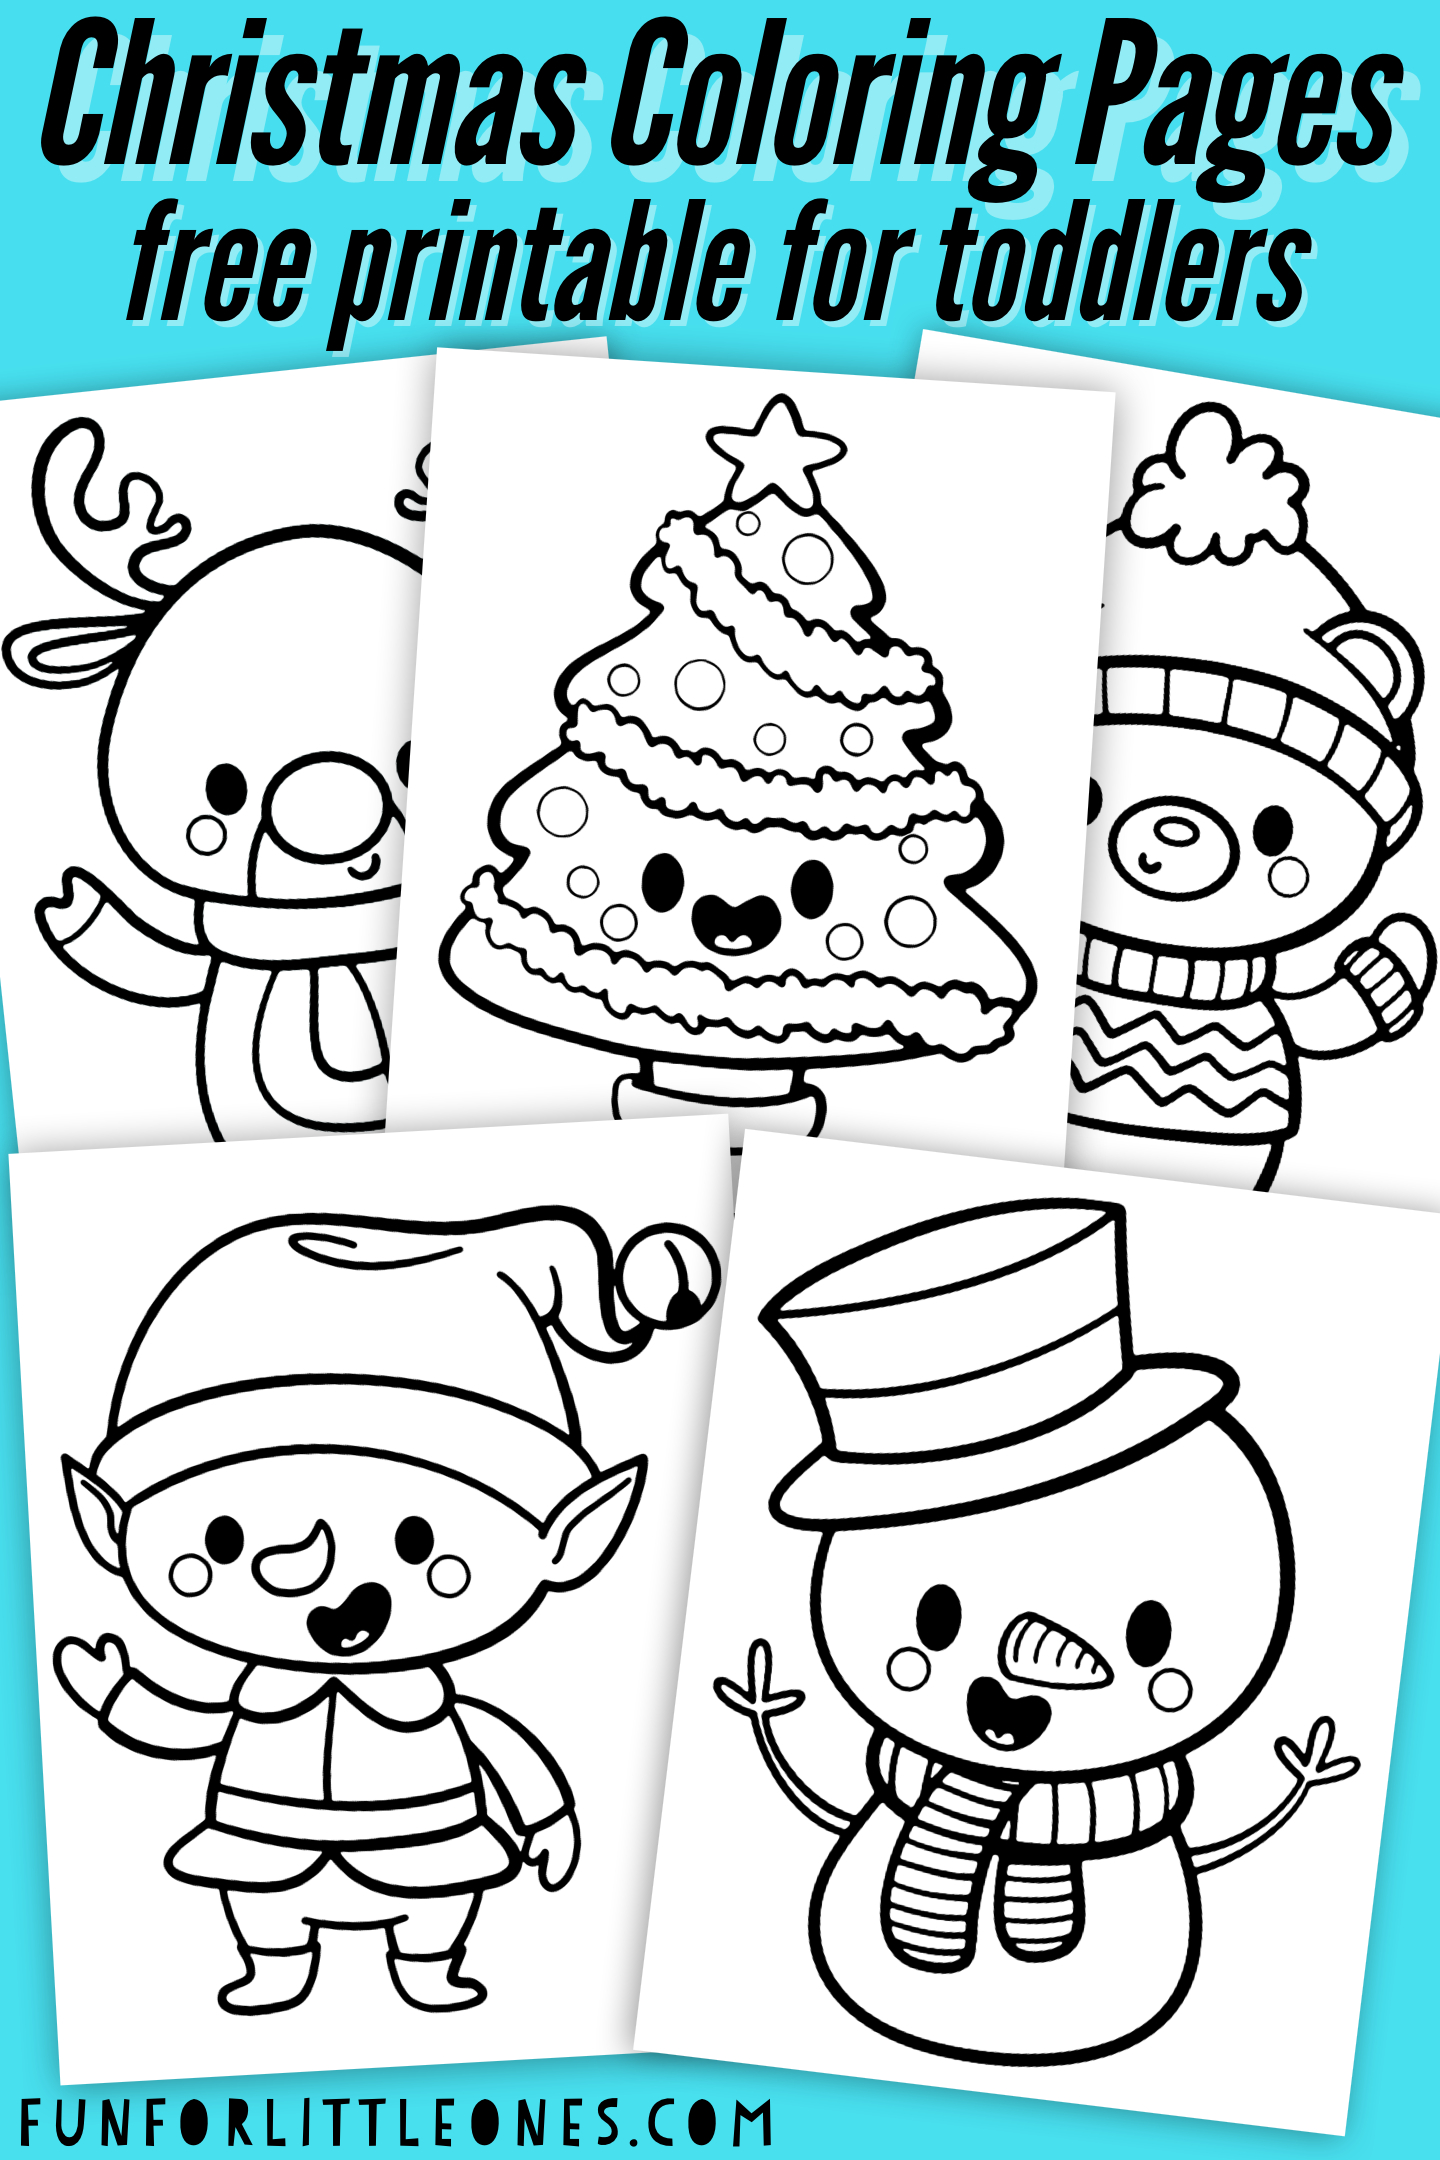 Free Printable Christmas Coloring Pages For Toddlers Christmas Coloring Pages For Toddlers Free Printable